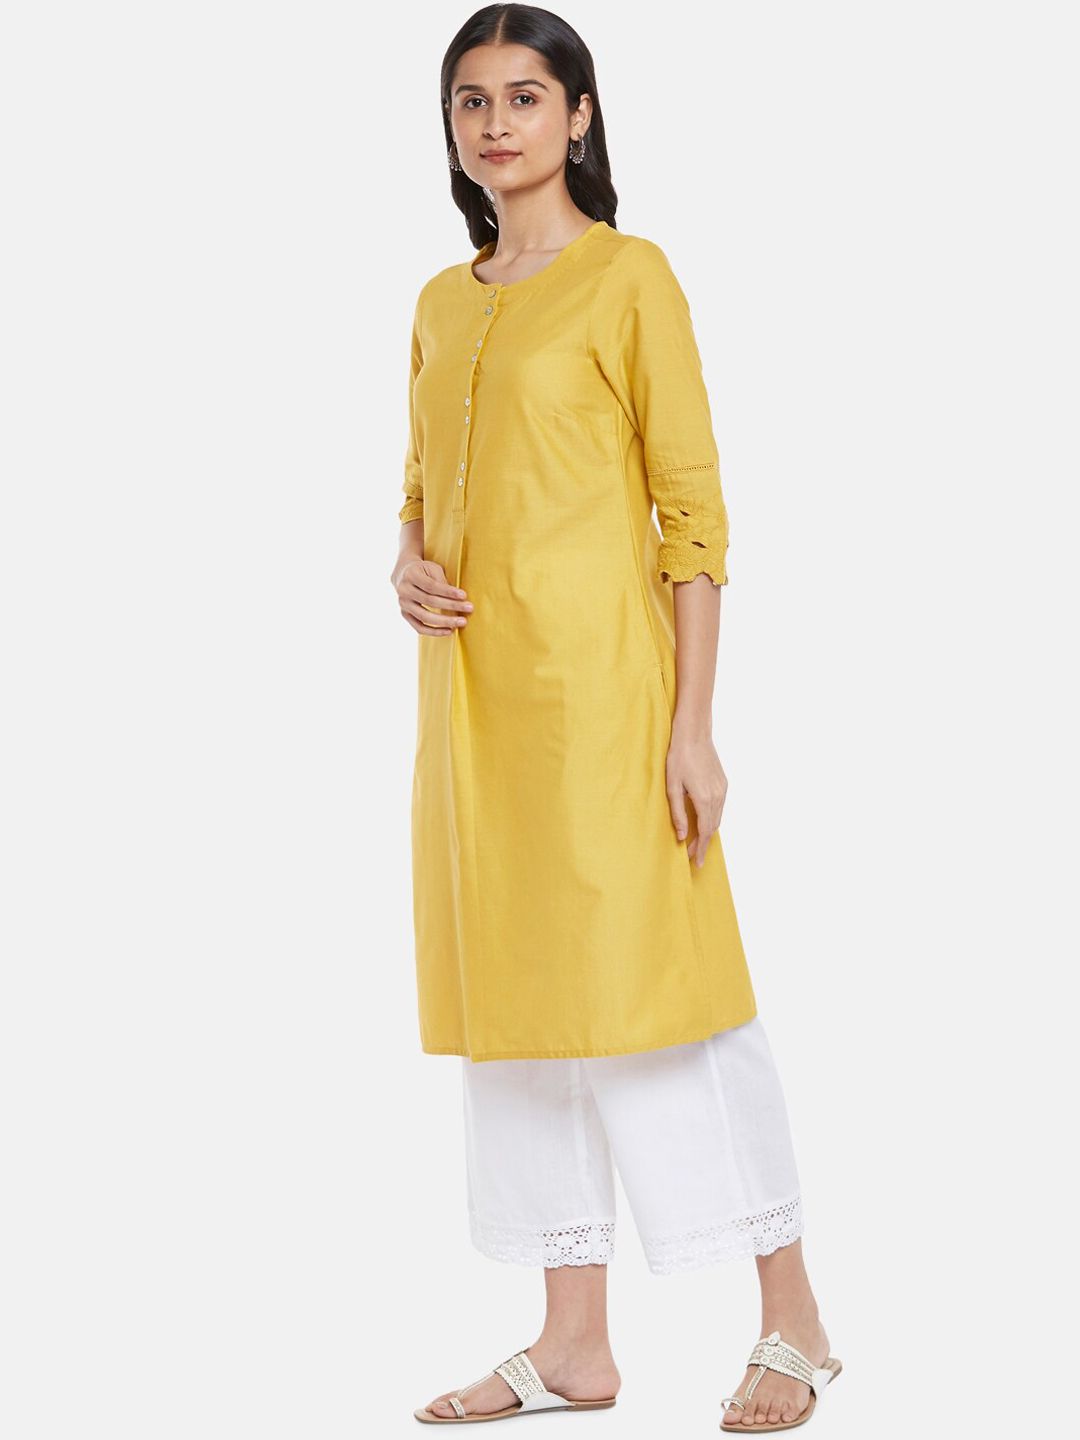 RANGMANCH BY PANTALOONS Women Yellow Thread Work Kurta Price in India